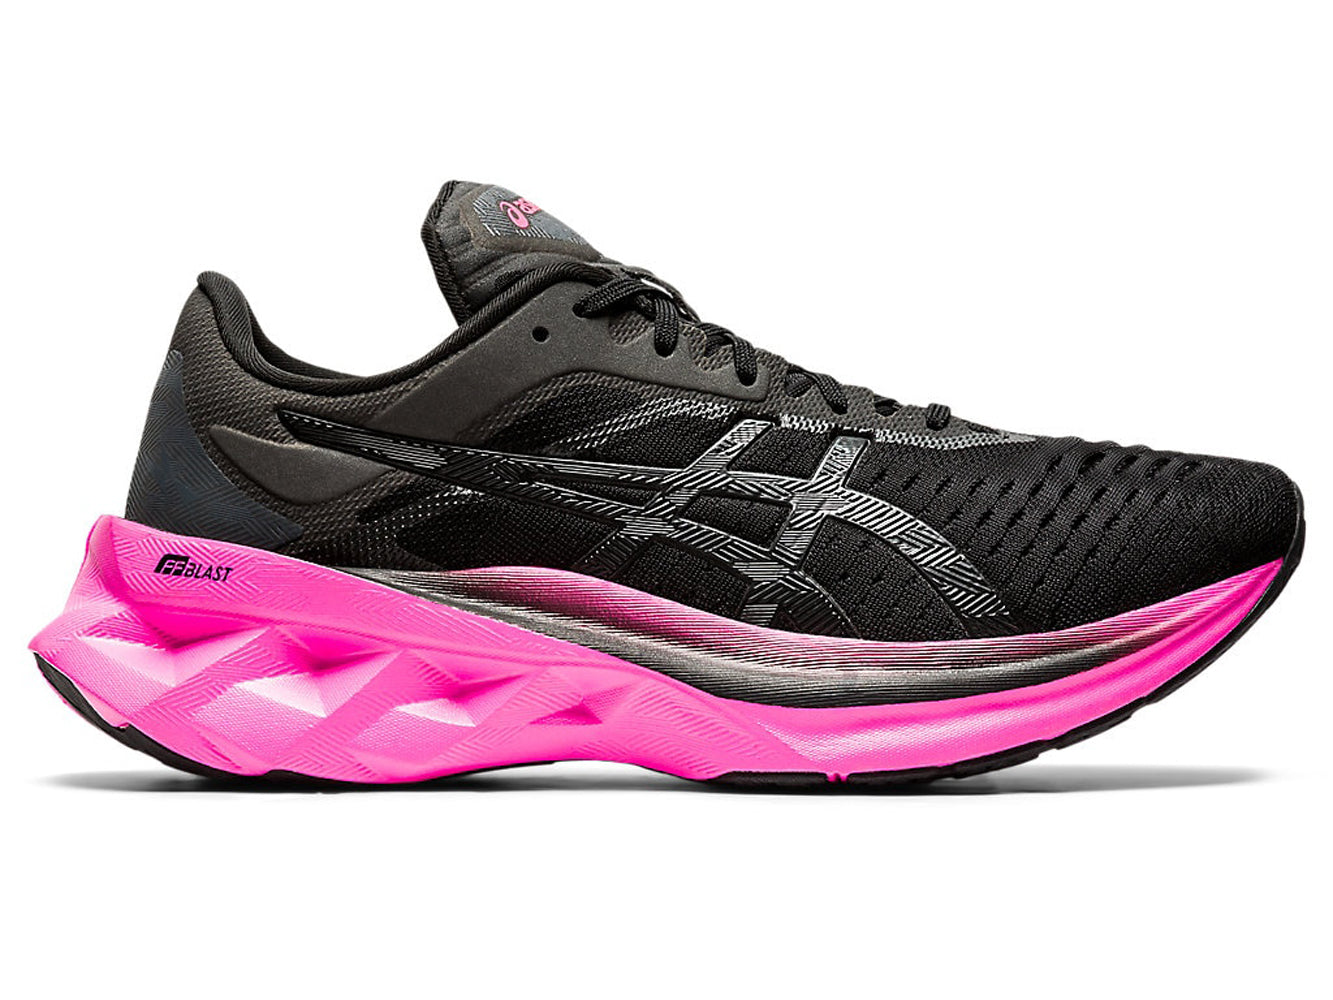 Women's Asics Novablast Running Shoe in Black/Pink Glo from the side